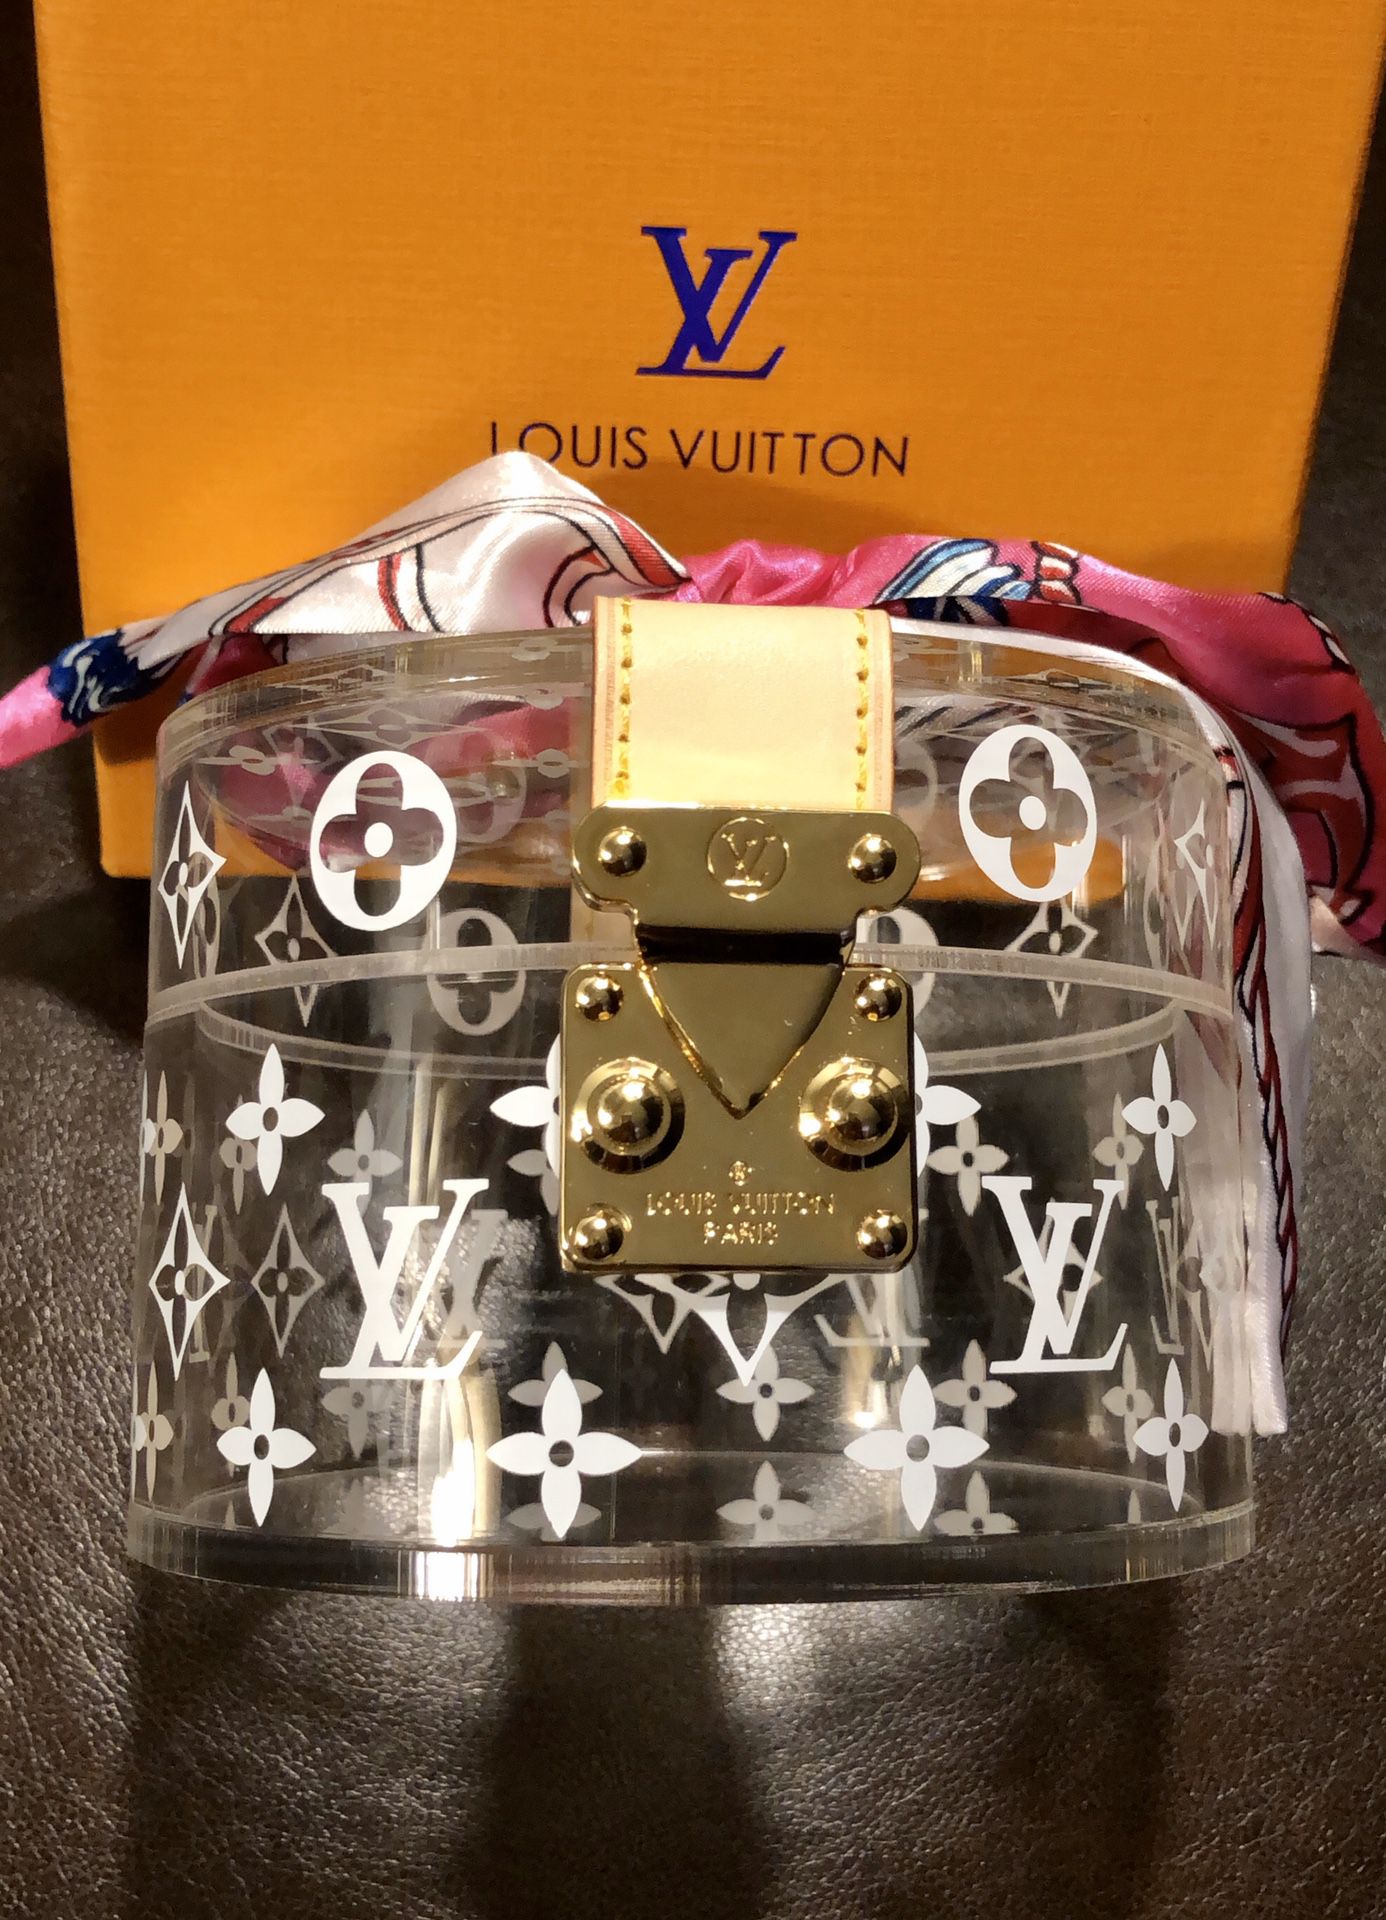 Louis Vuitton “BOX SCOTT”